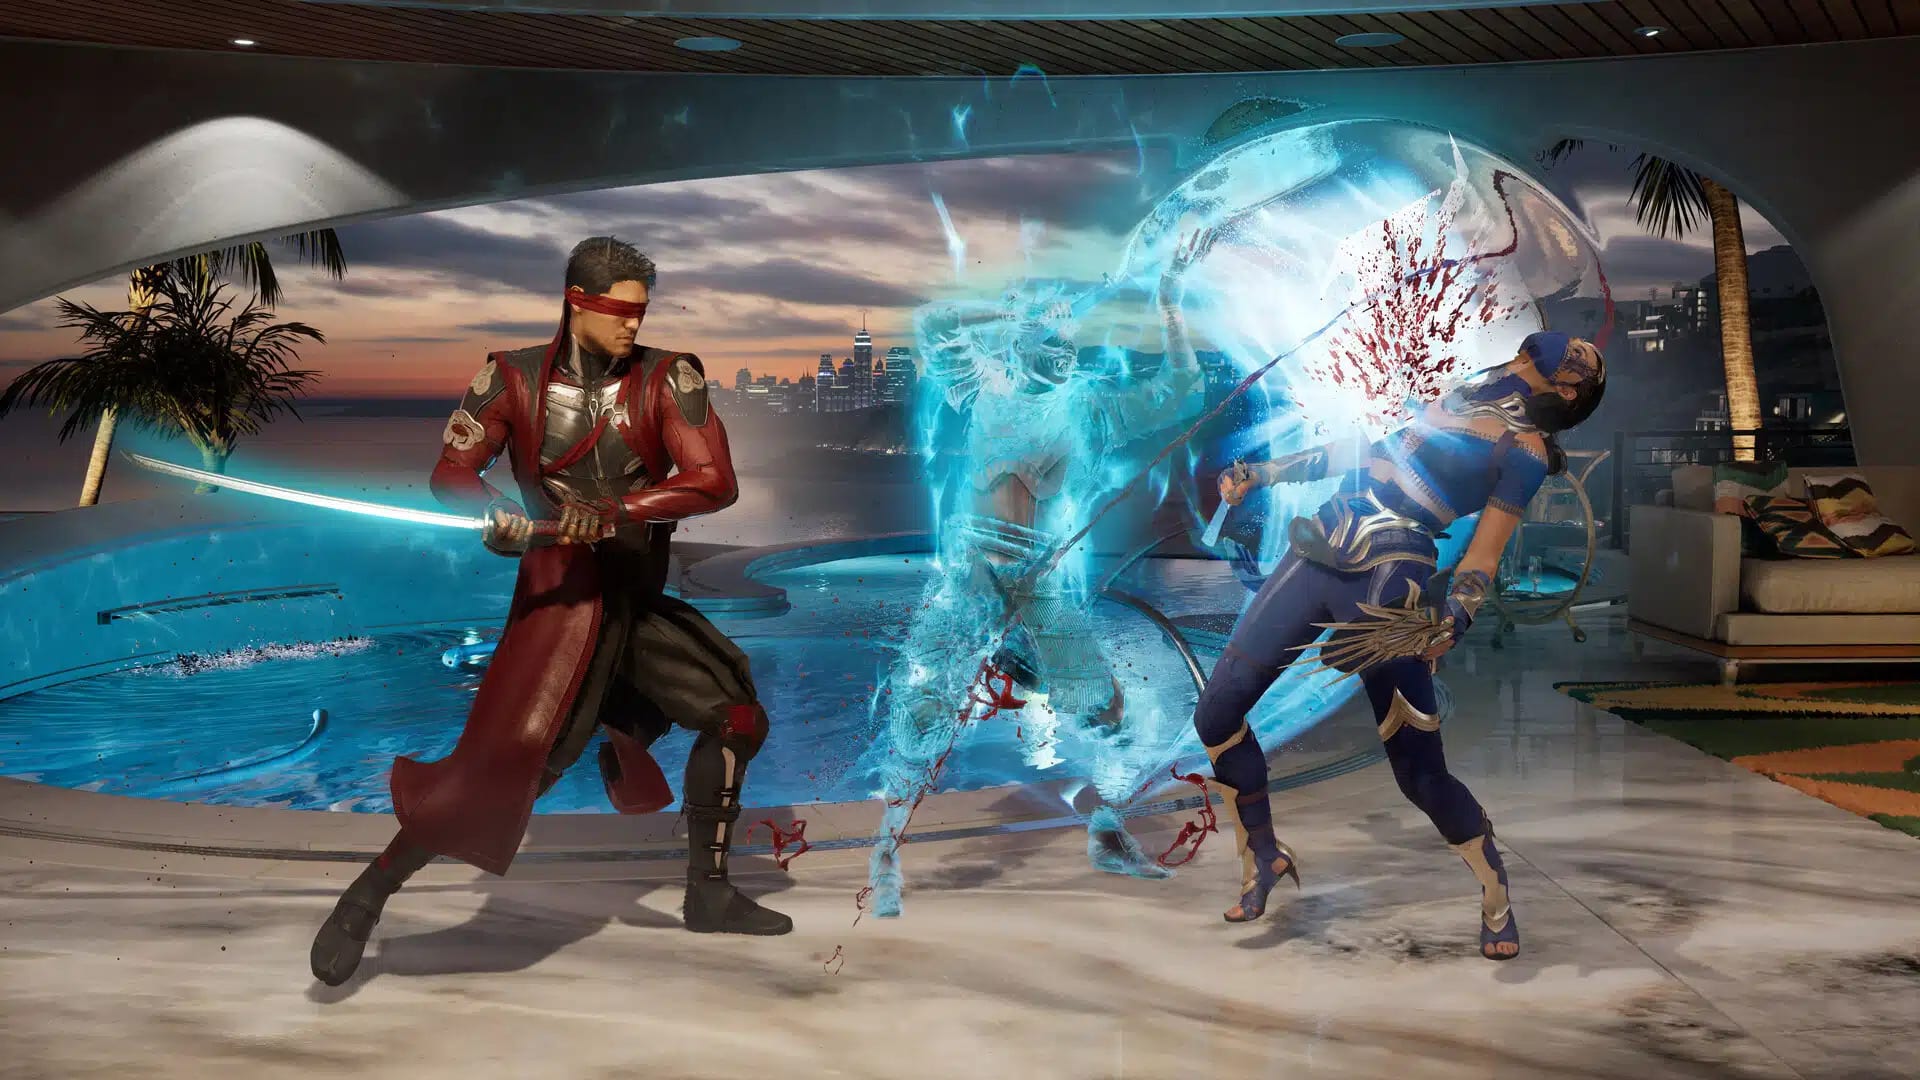 Mortal Kombat 1 Won't Have Crossplay At Launch - GameSpot